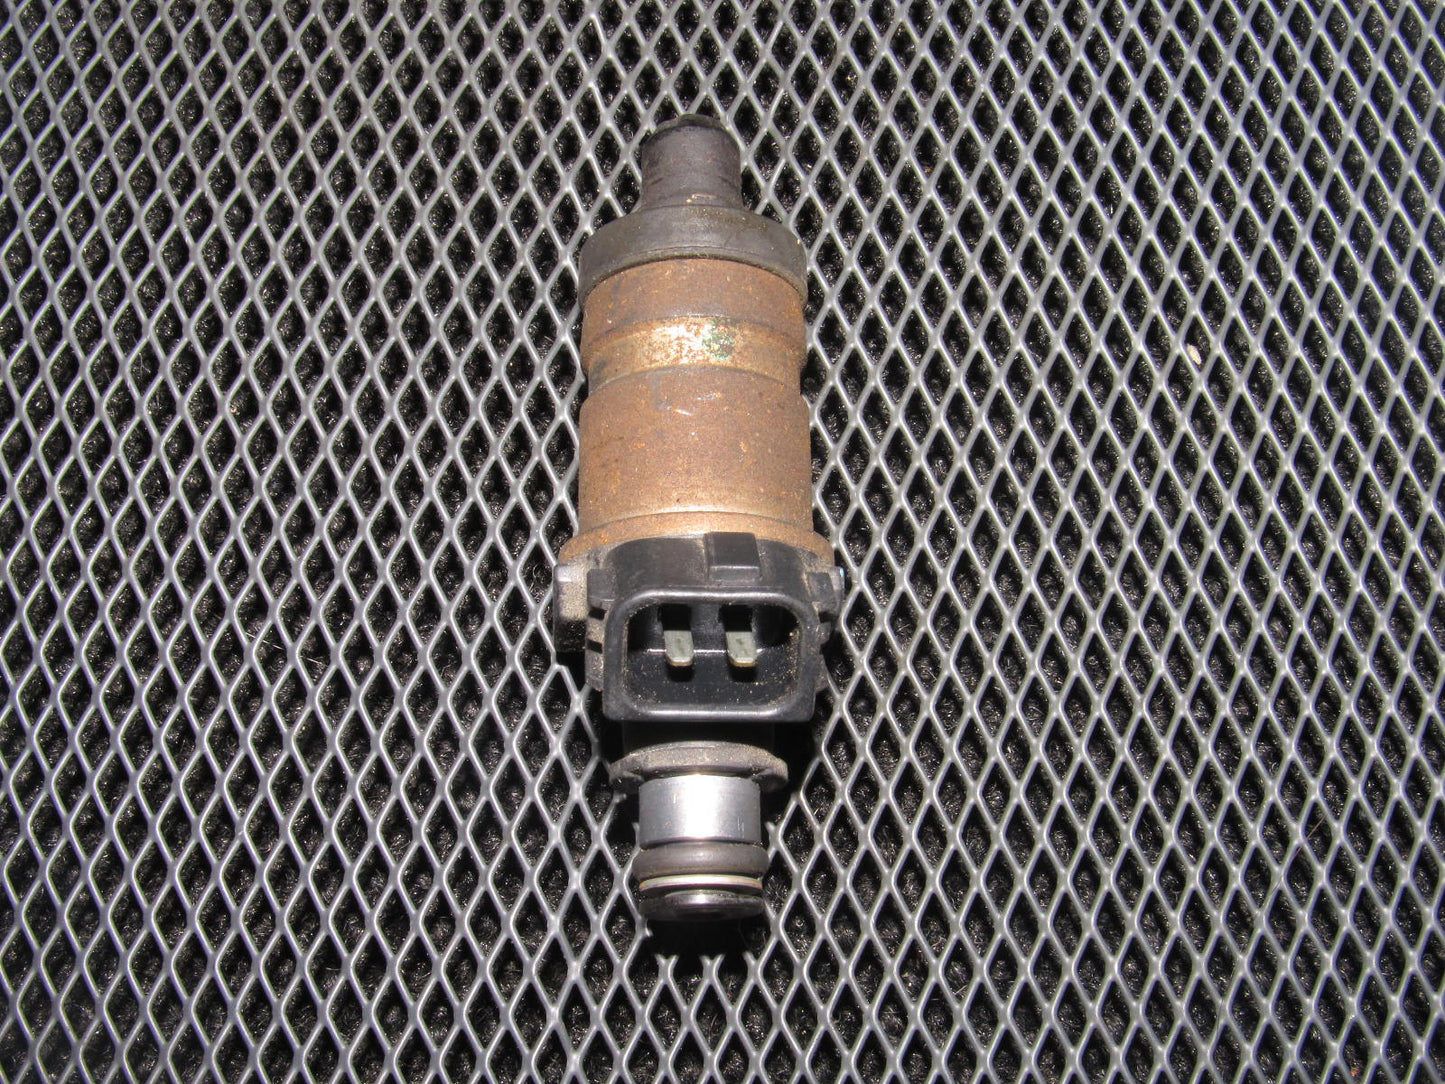 97-01 Honda Prelude OEM Fuel Injector - 1 piece